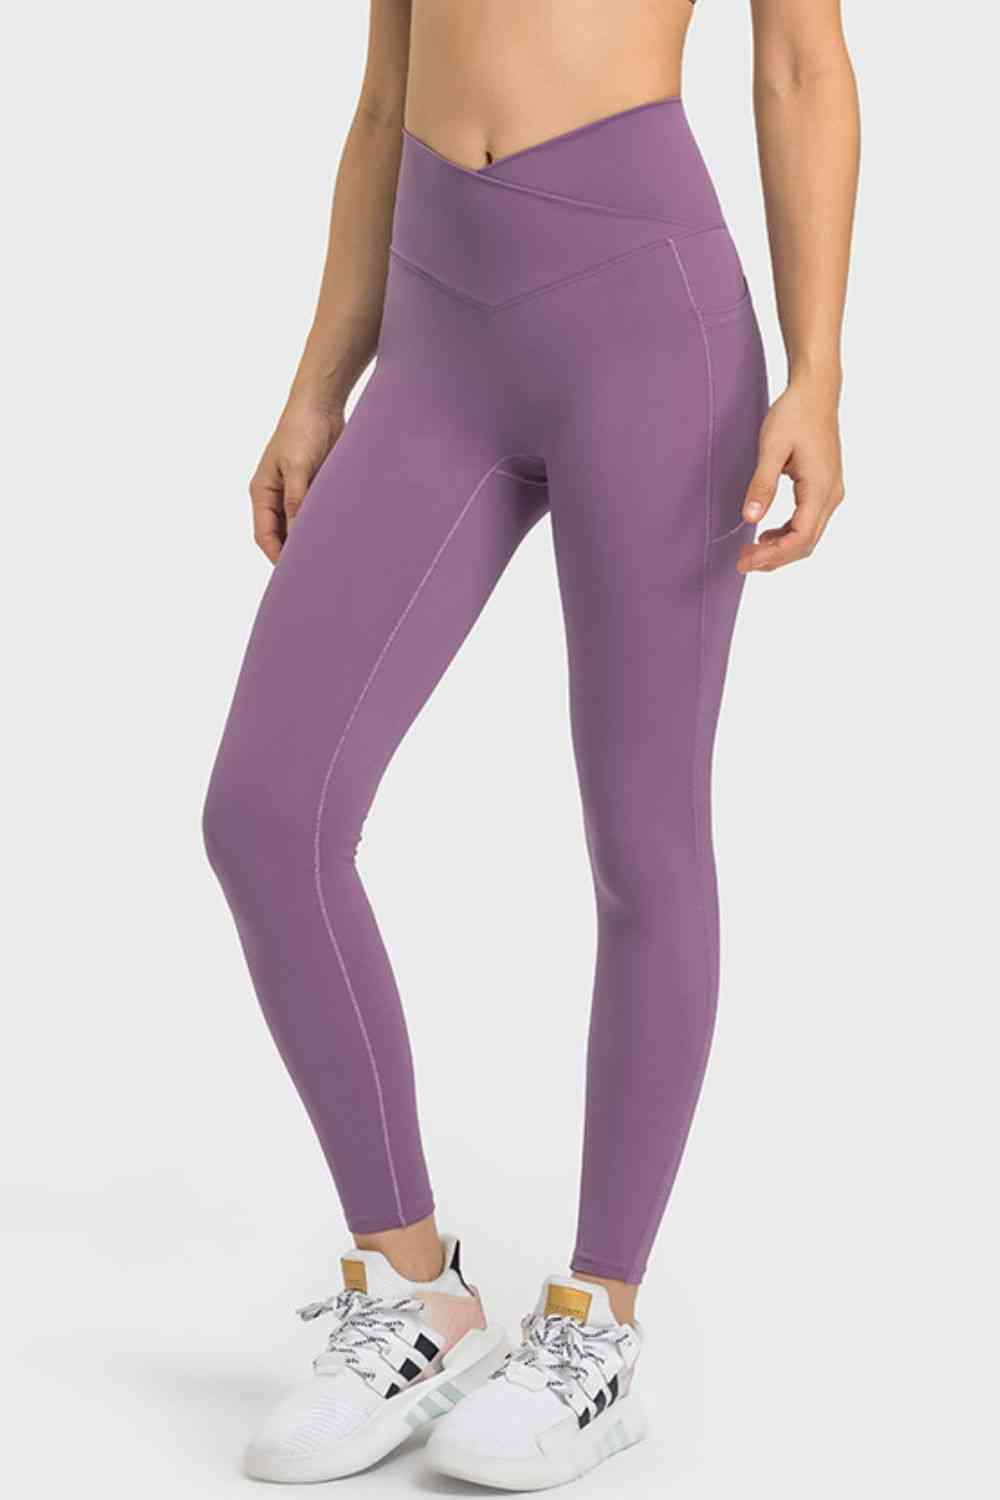 V-Waist Yoga Leggings with Pockets Purple 4 